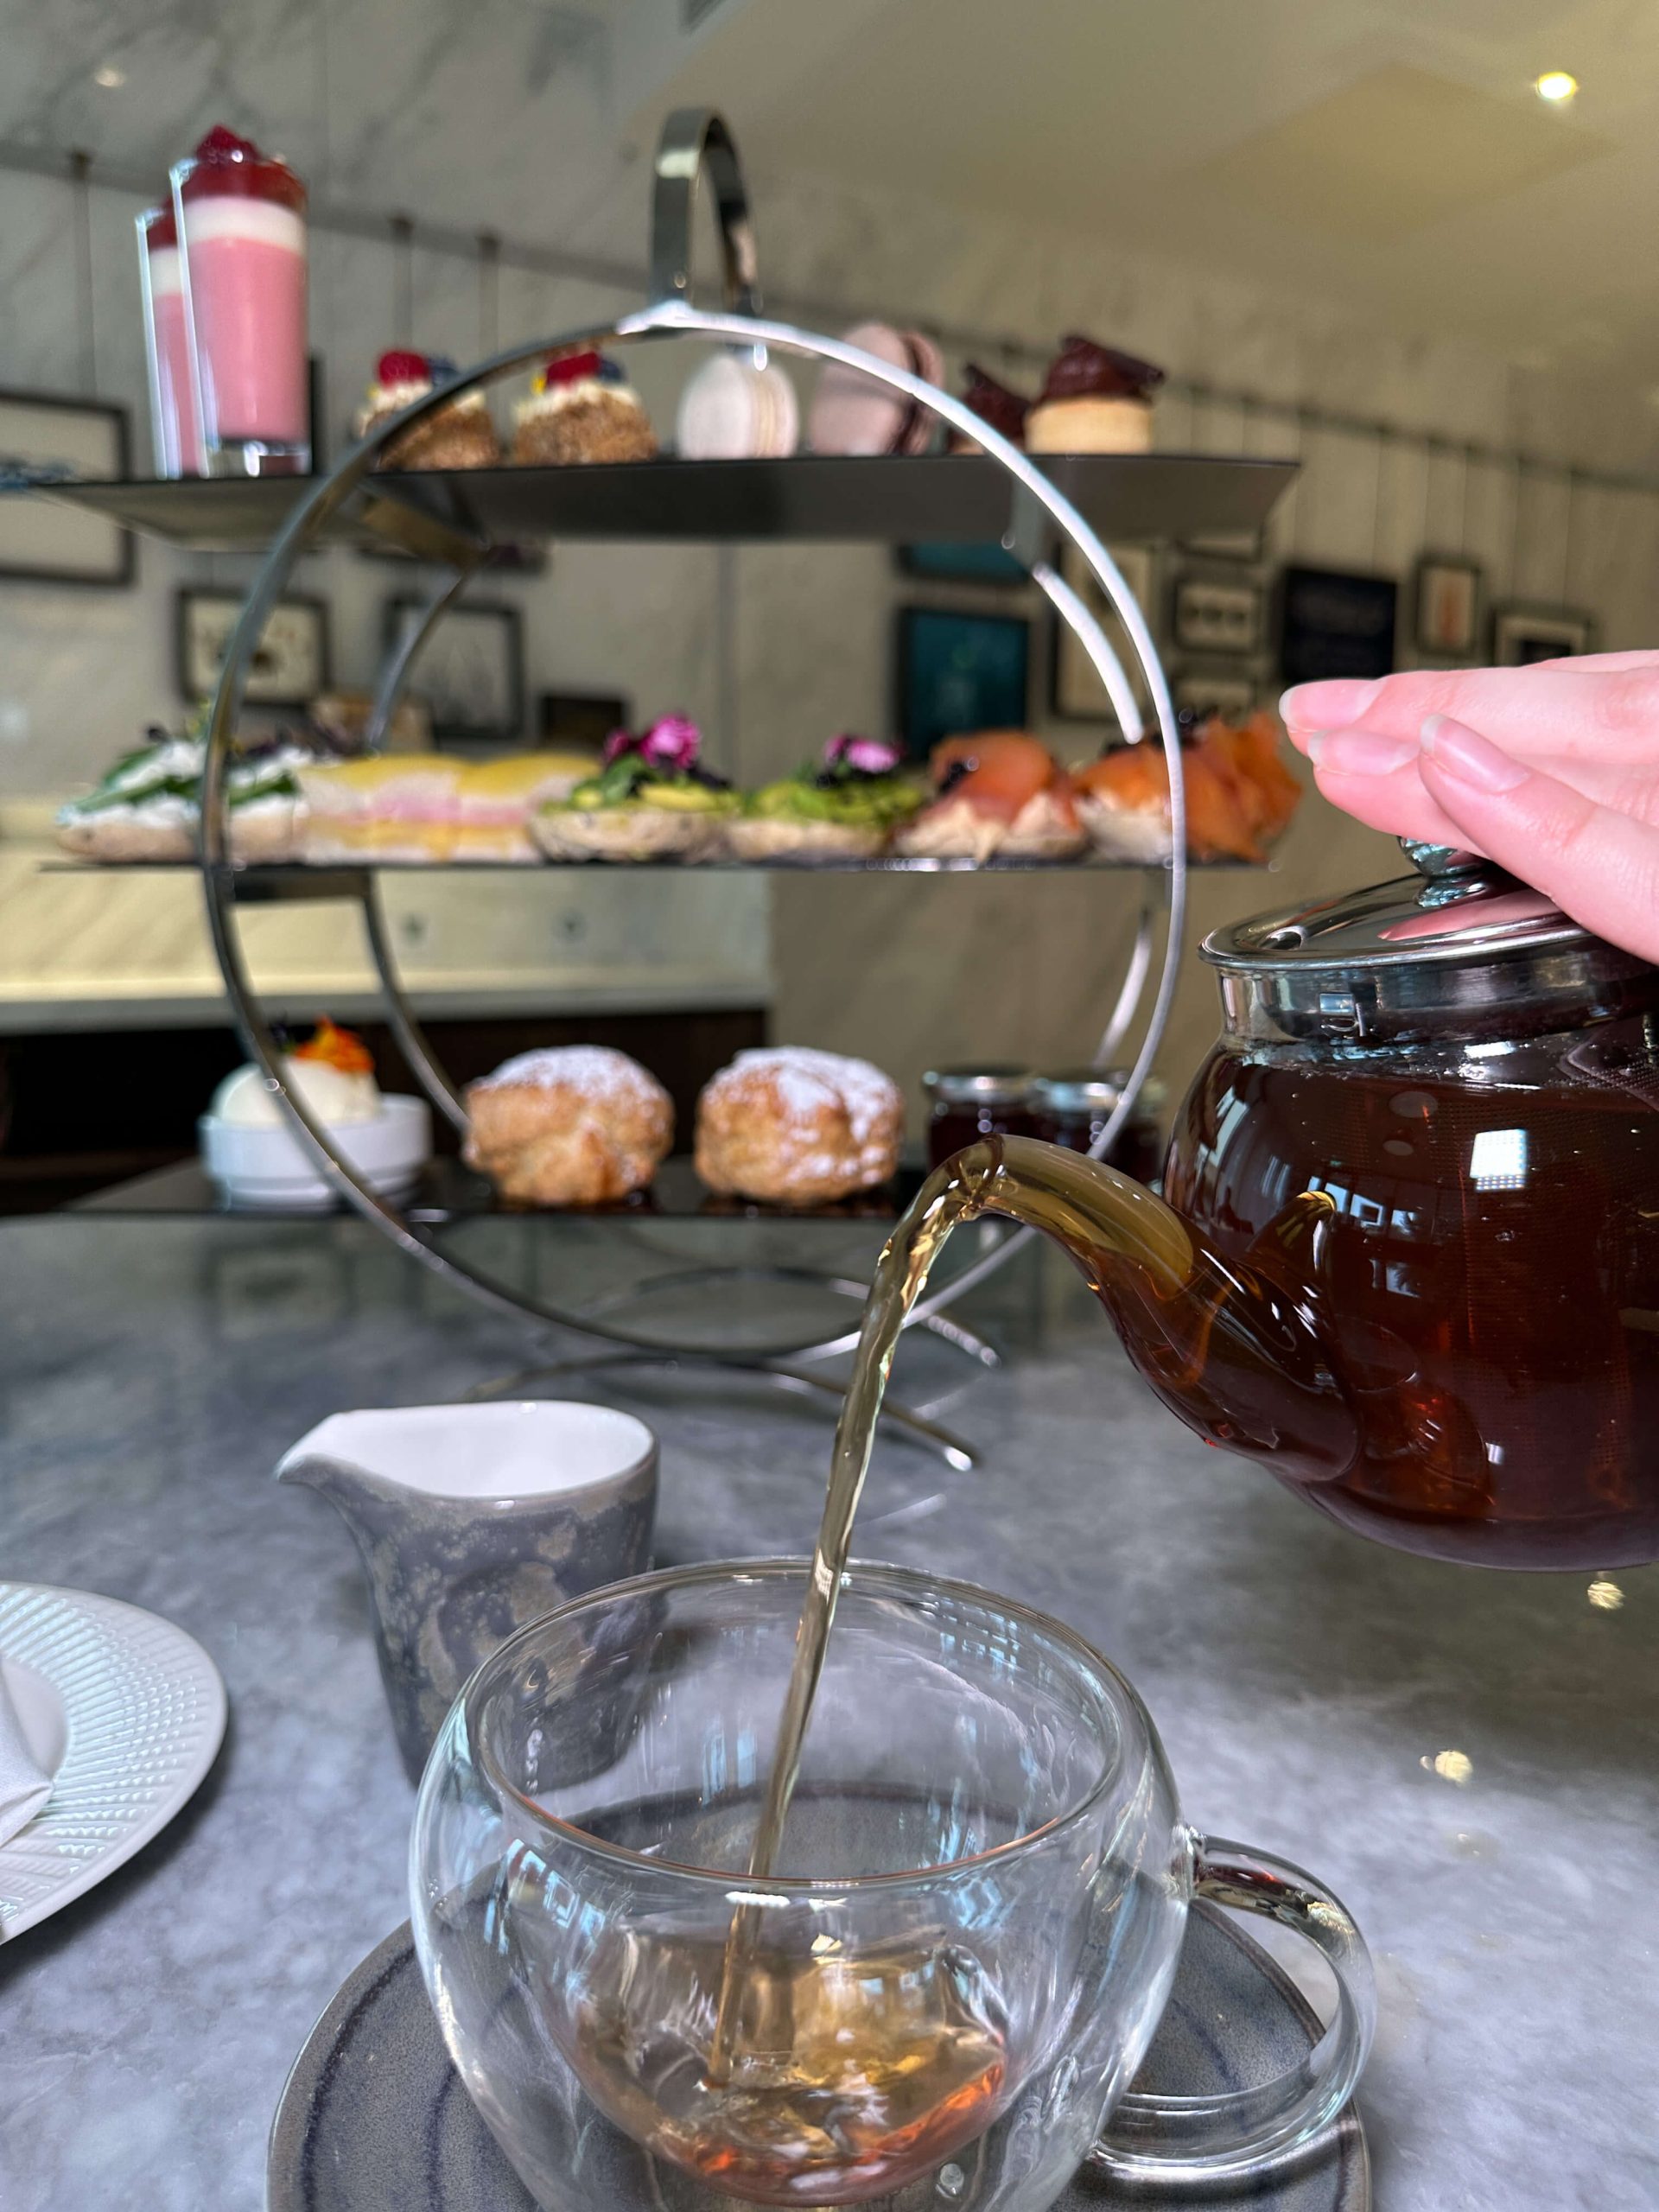 Afternoon tea in cambridge - the Folio Bar & Kitchen